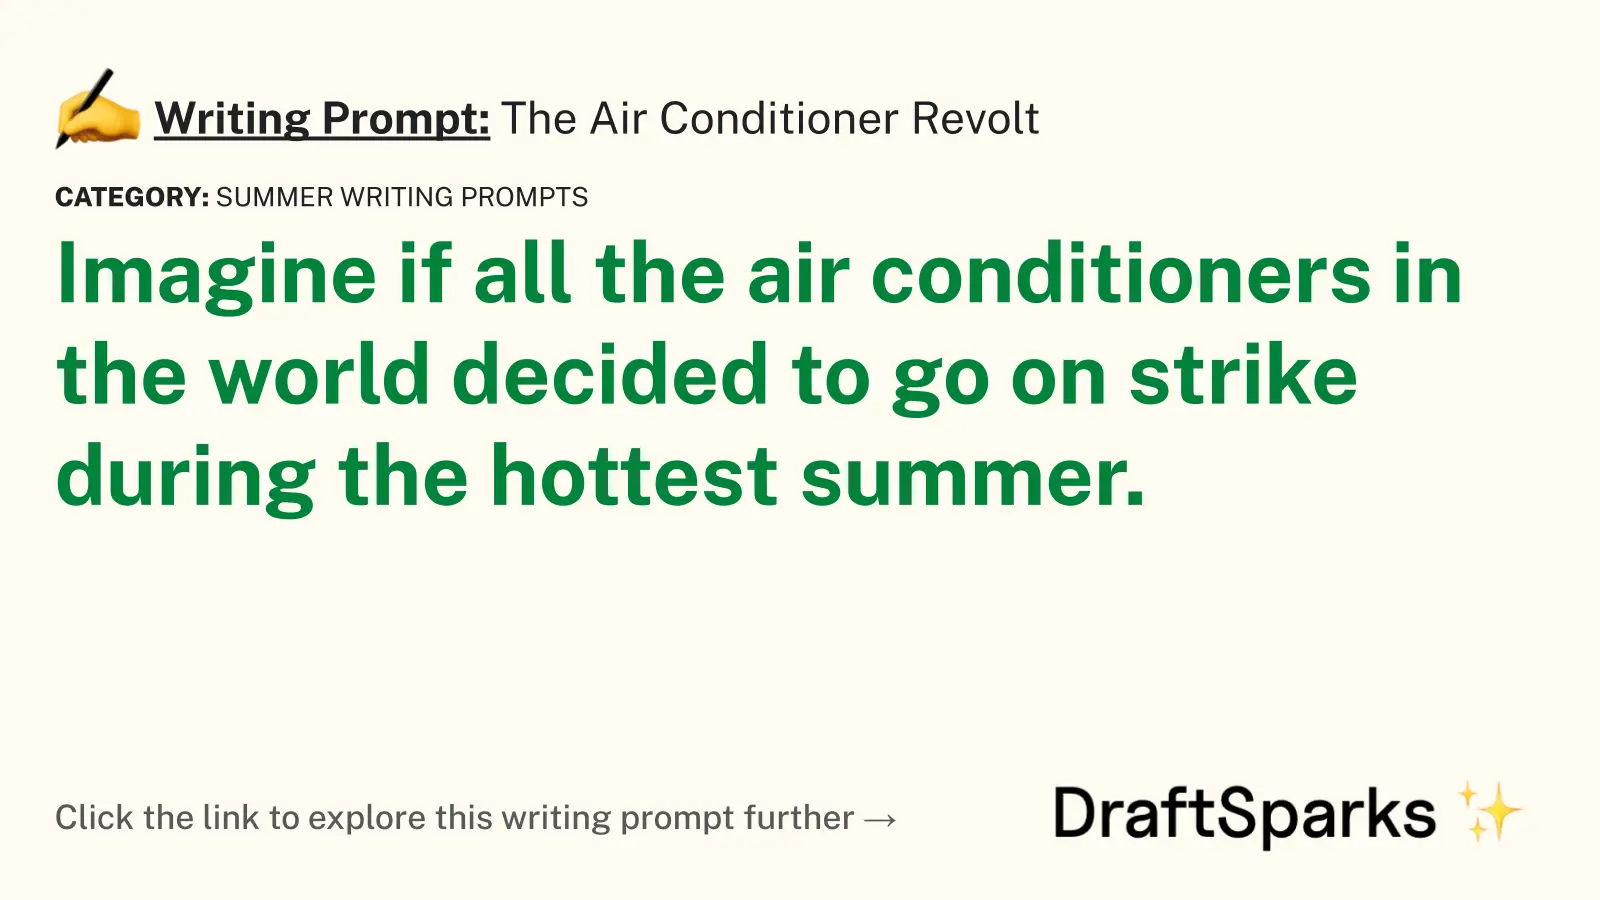 The Air Conditioner Revolt